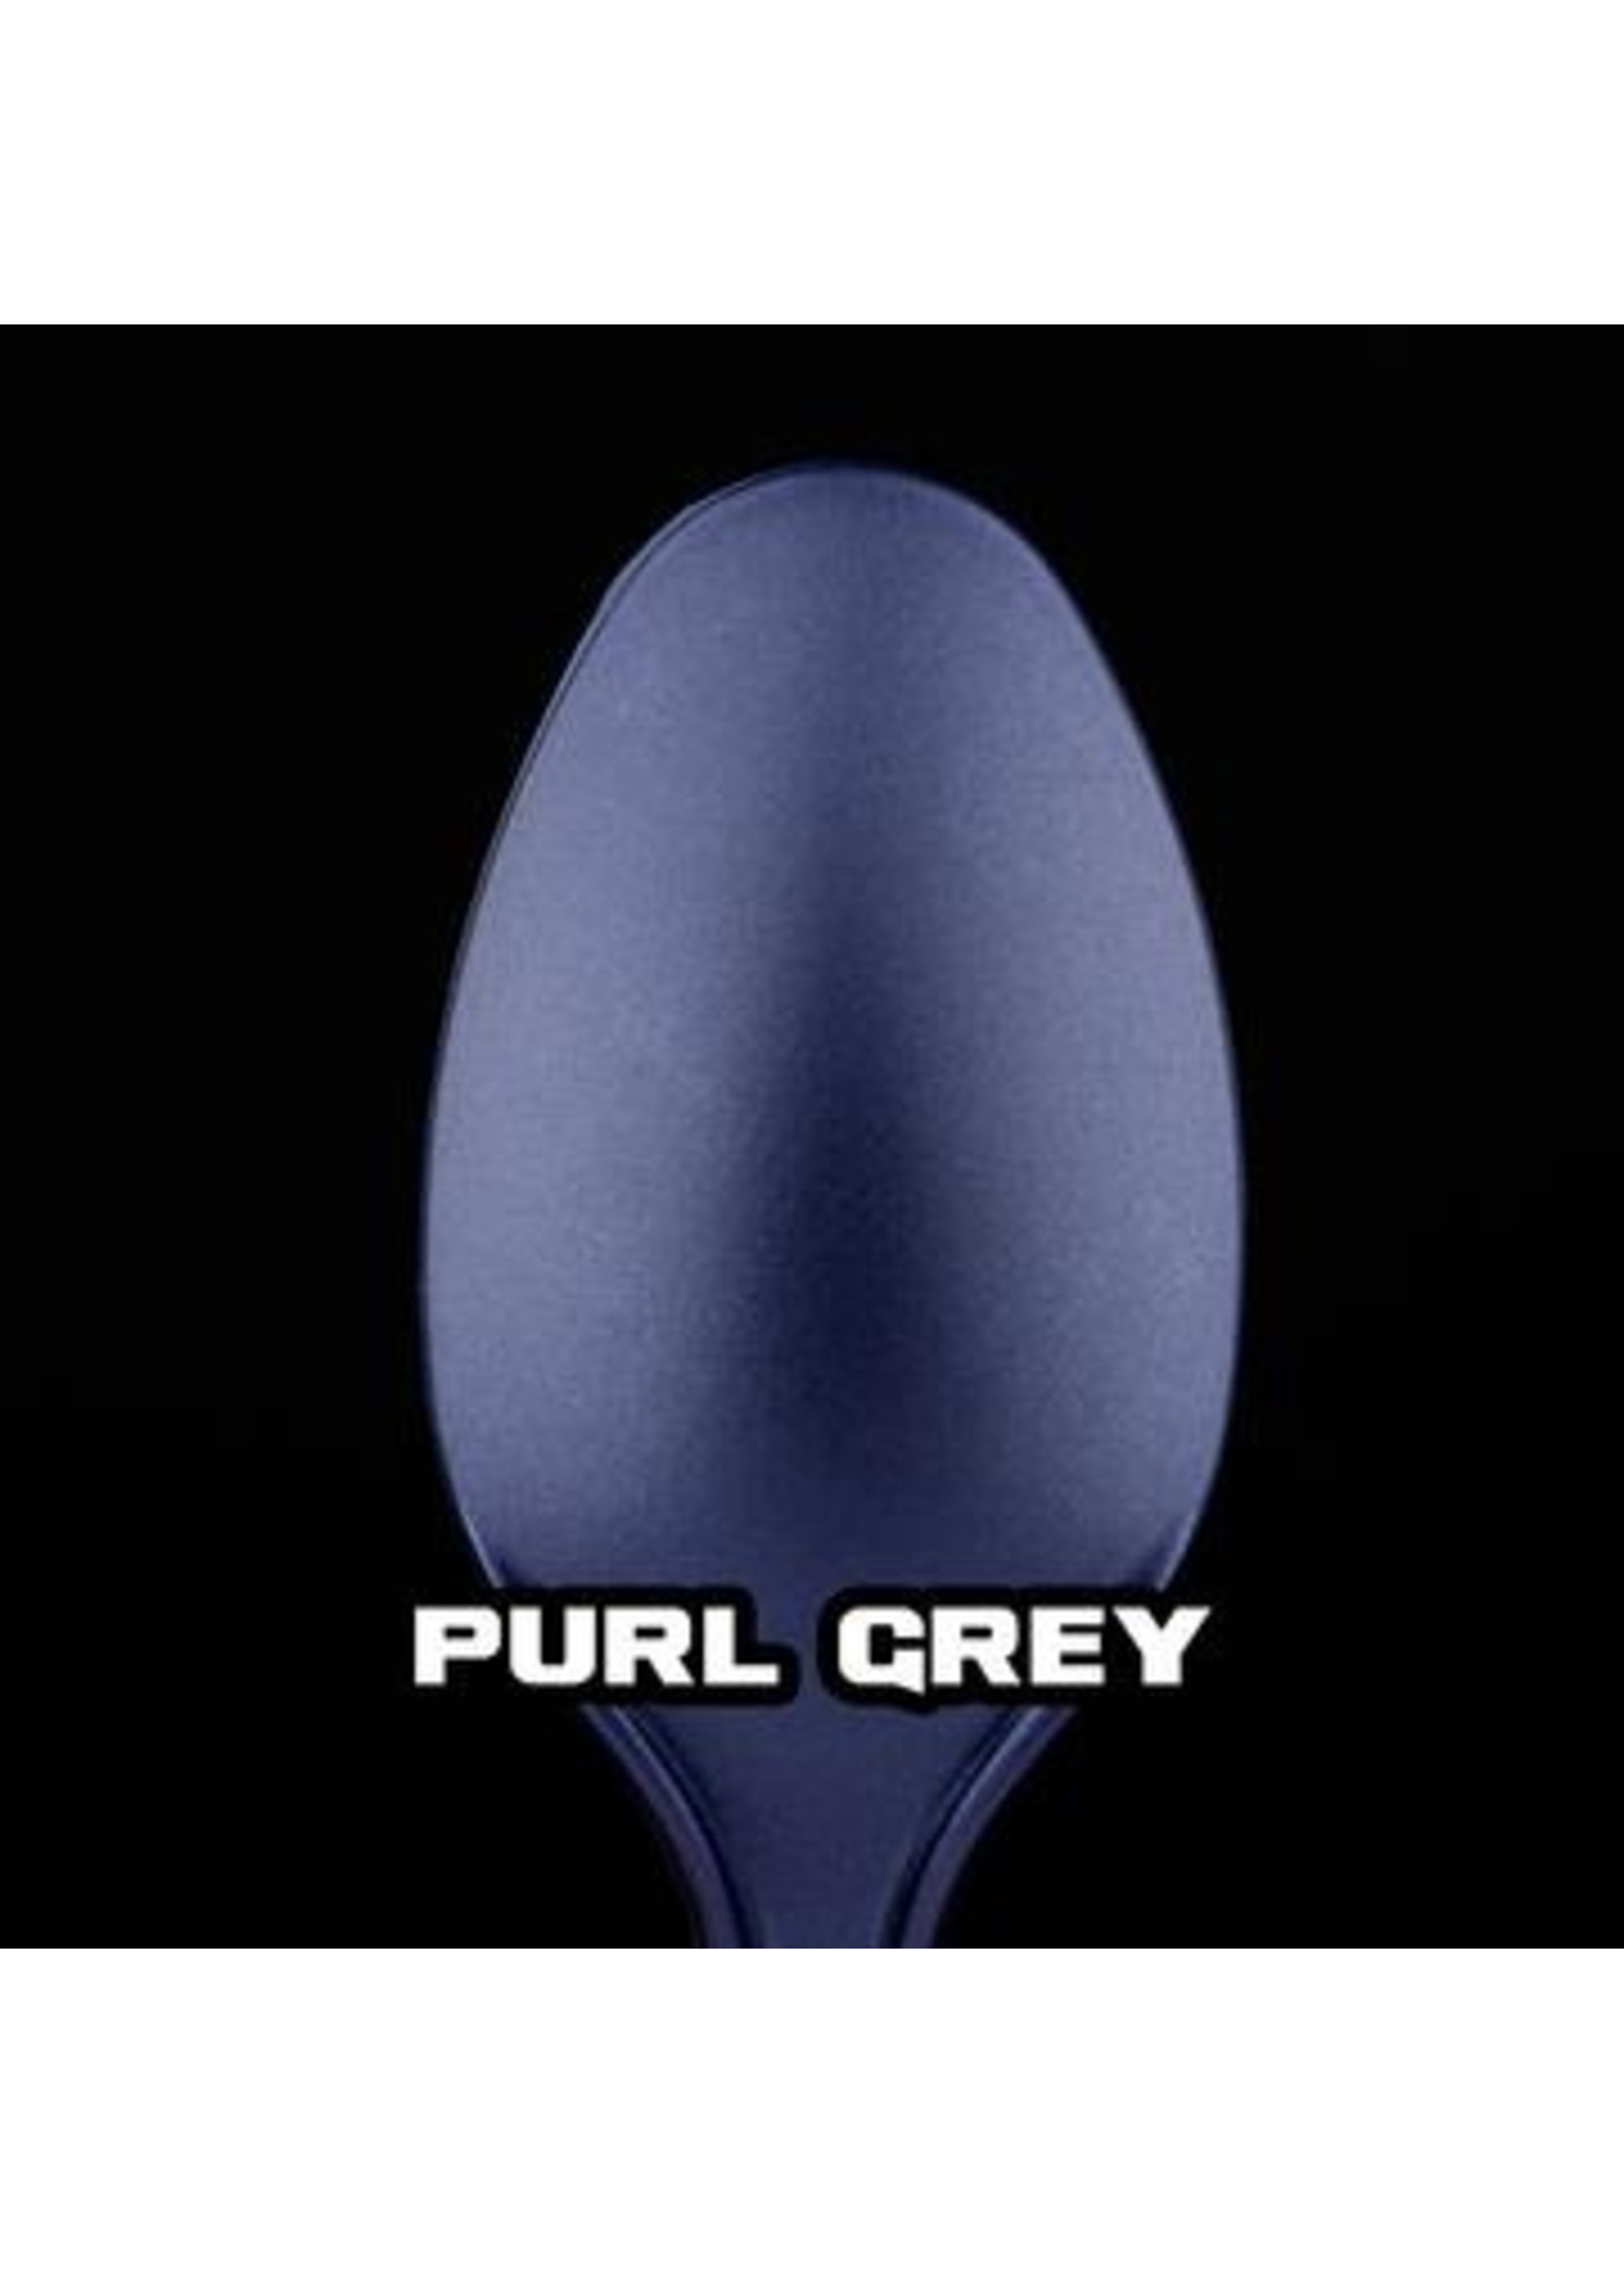 Turbo Dork Purl Grey Metallic Acrylic Paint - 20ml Bottle